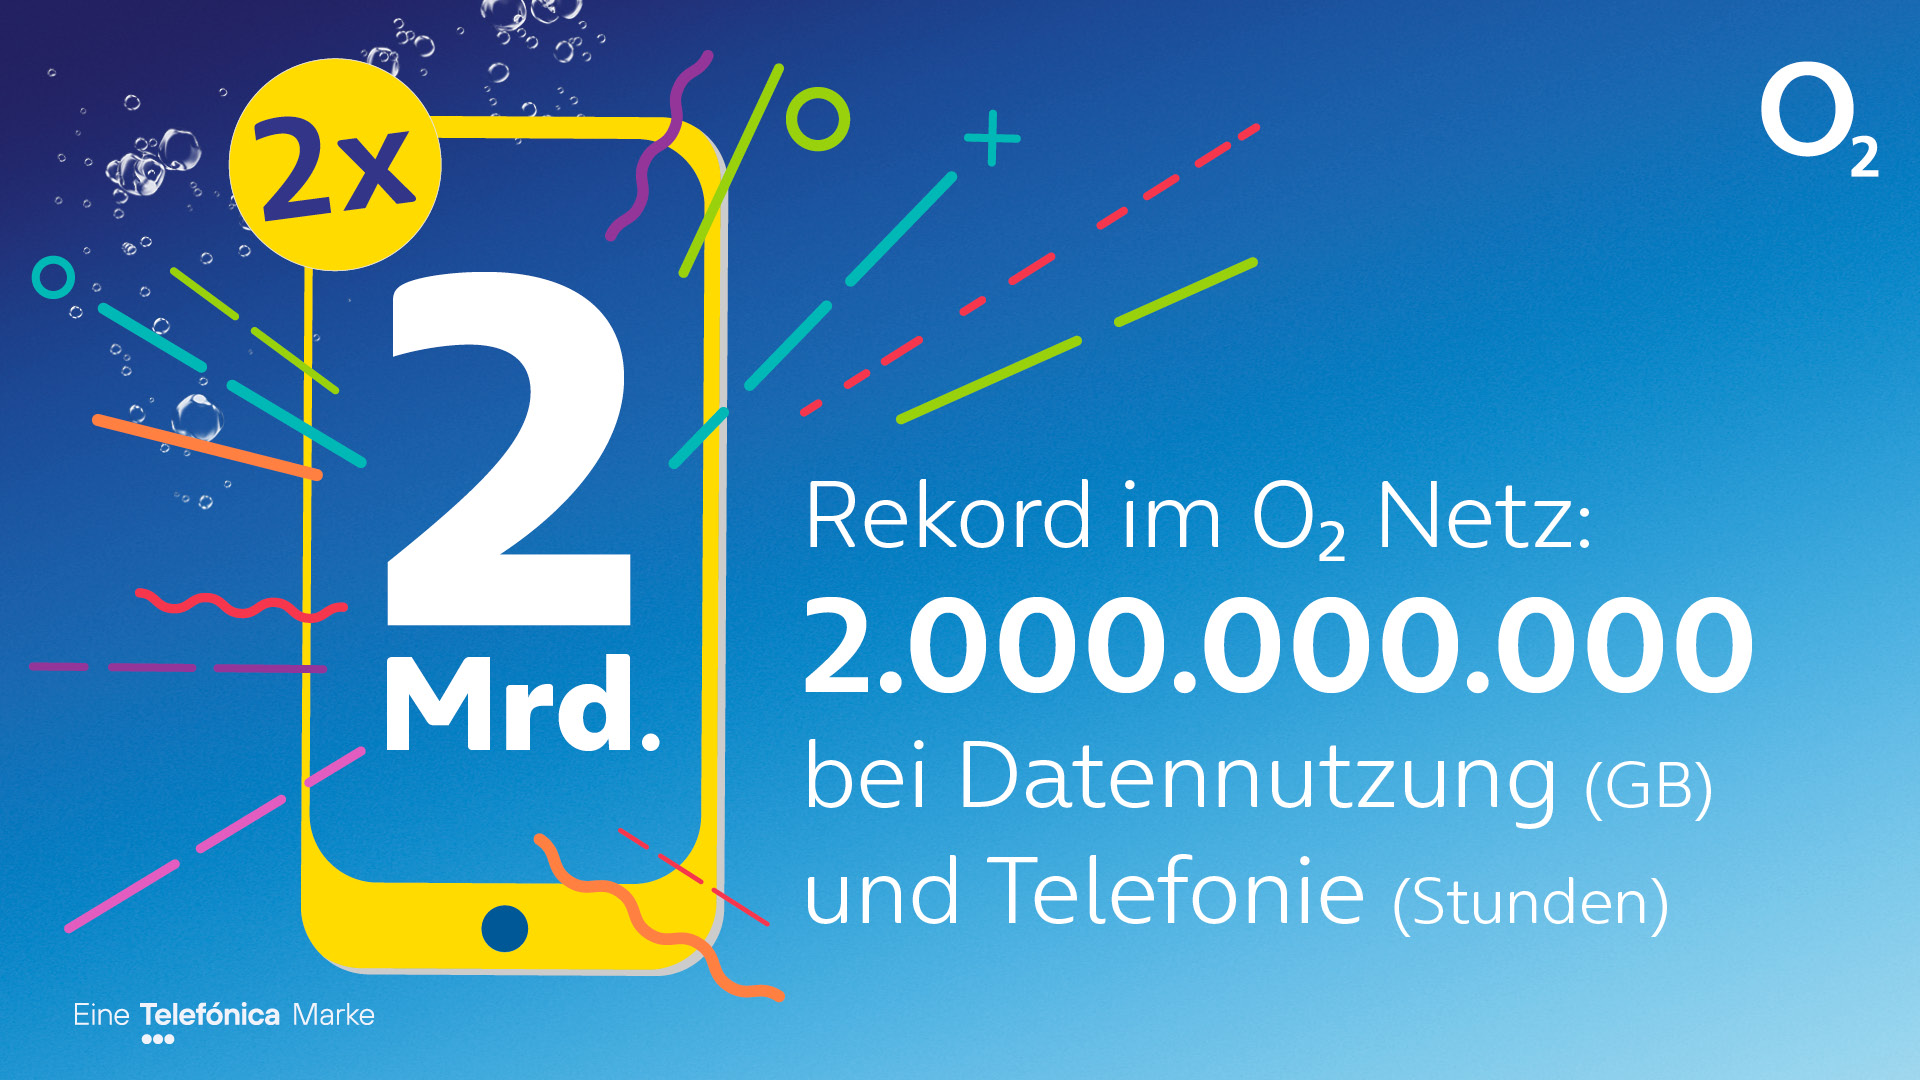 Telefonica-O2 Mobilfunknetz: O2 Netz knackt 2 Milliarden Gigabyte Grenze bei der Datennutzung